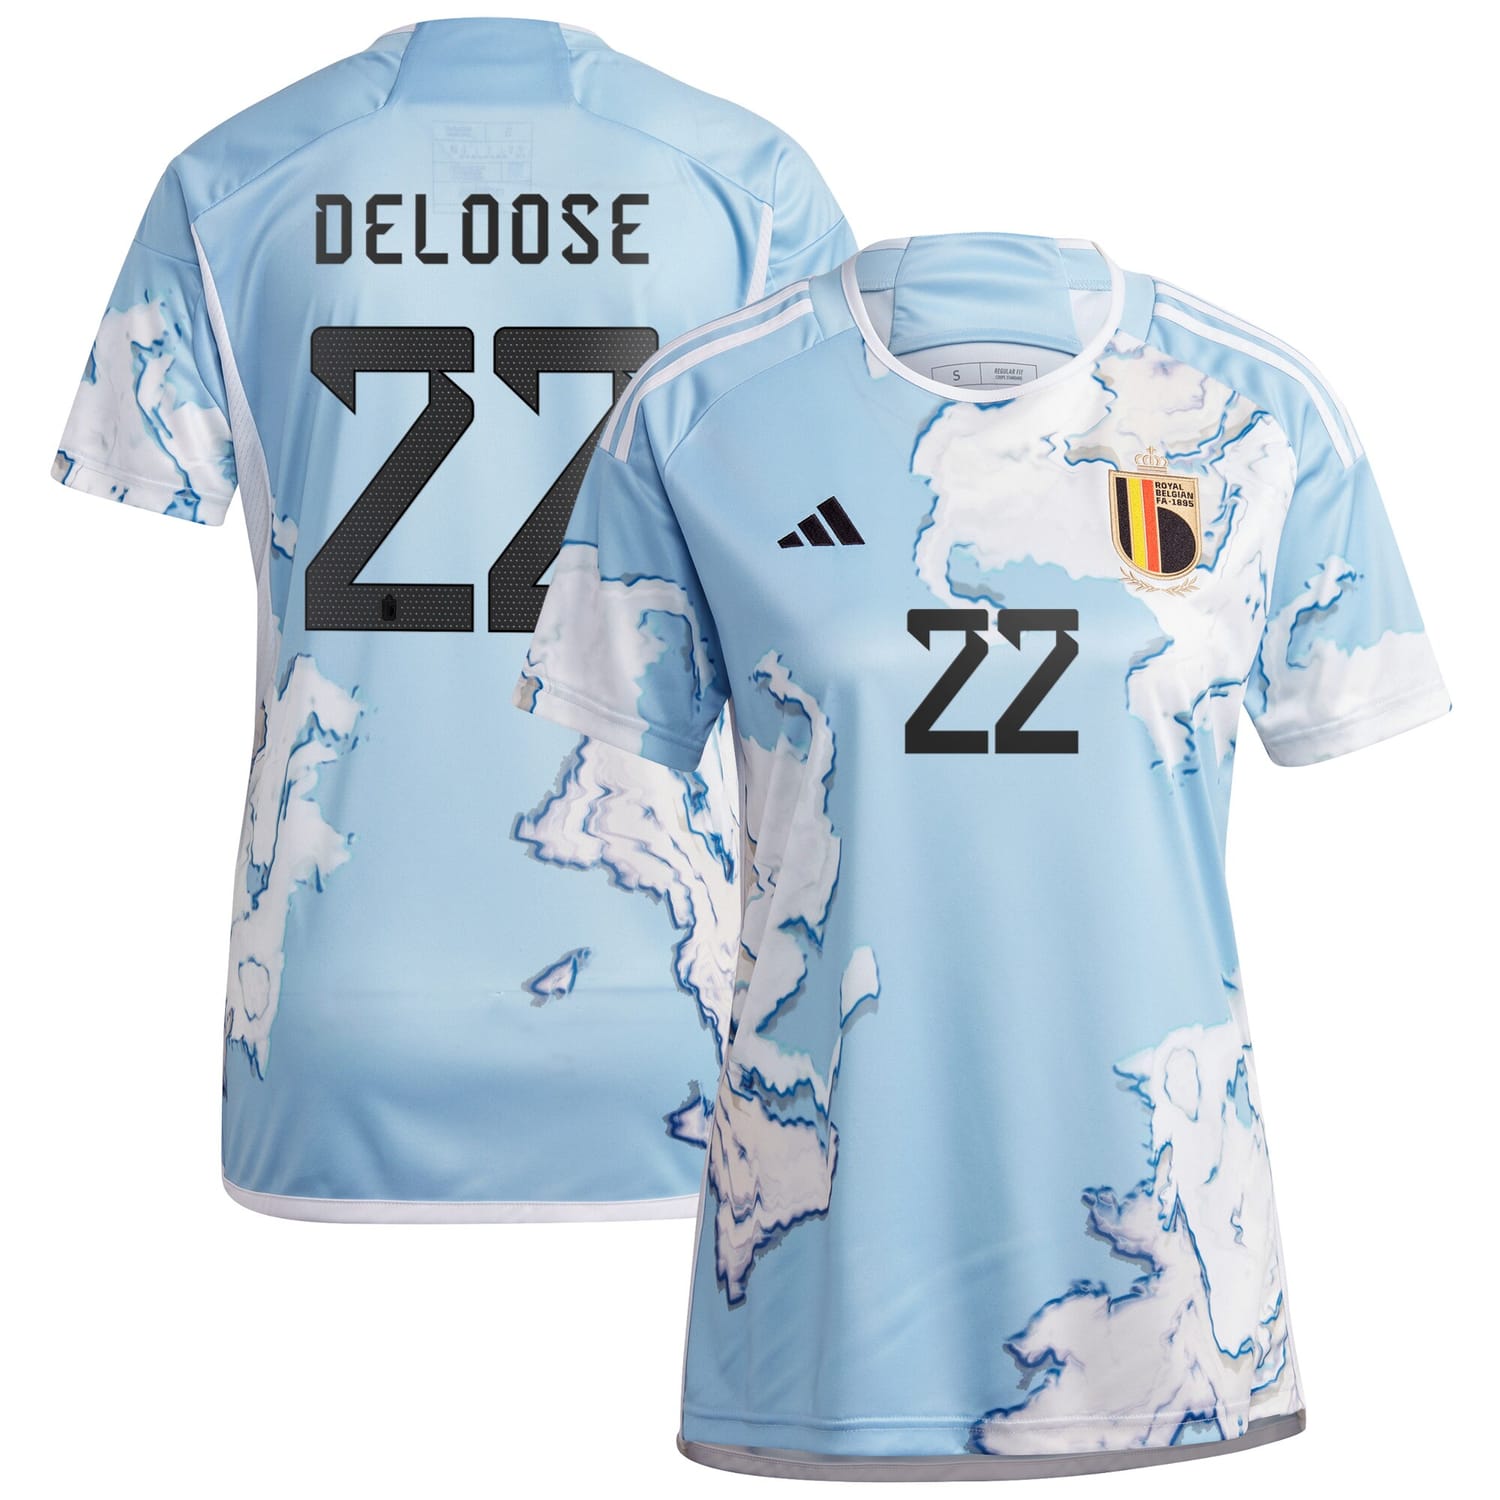 Belgium National Team Away Jersey Shirt 2023 player Laura Deloose 22 printing for Women